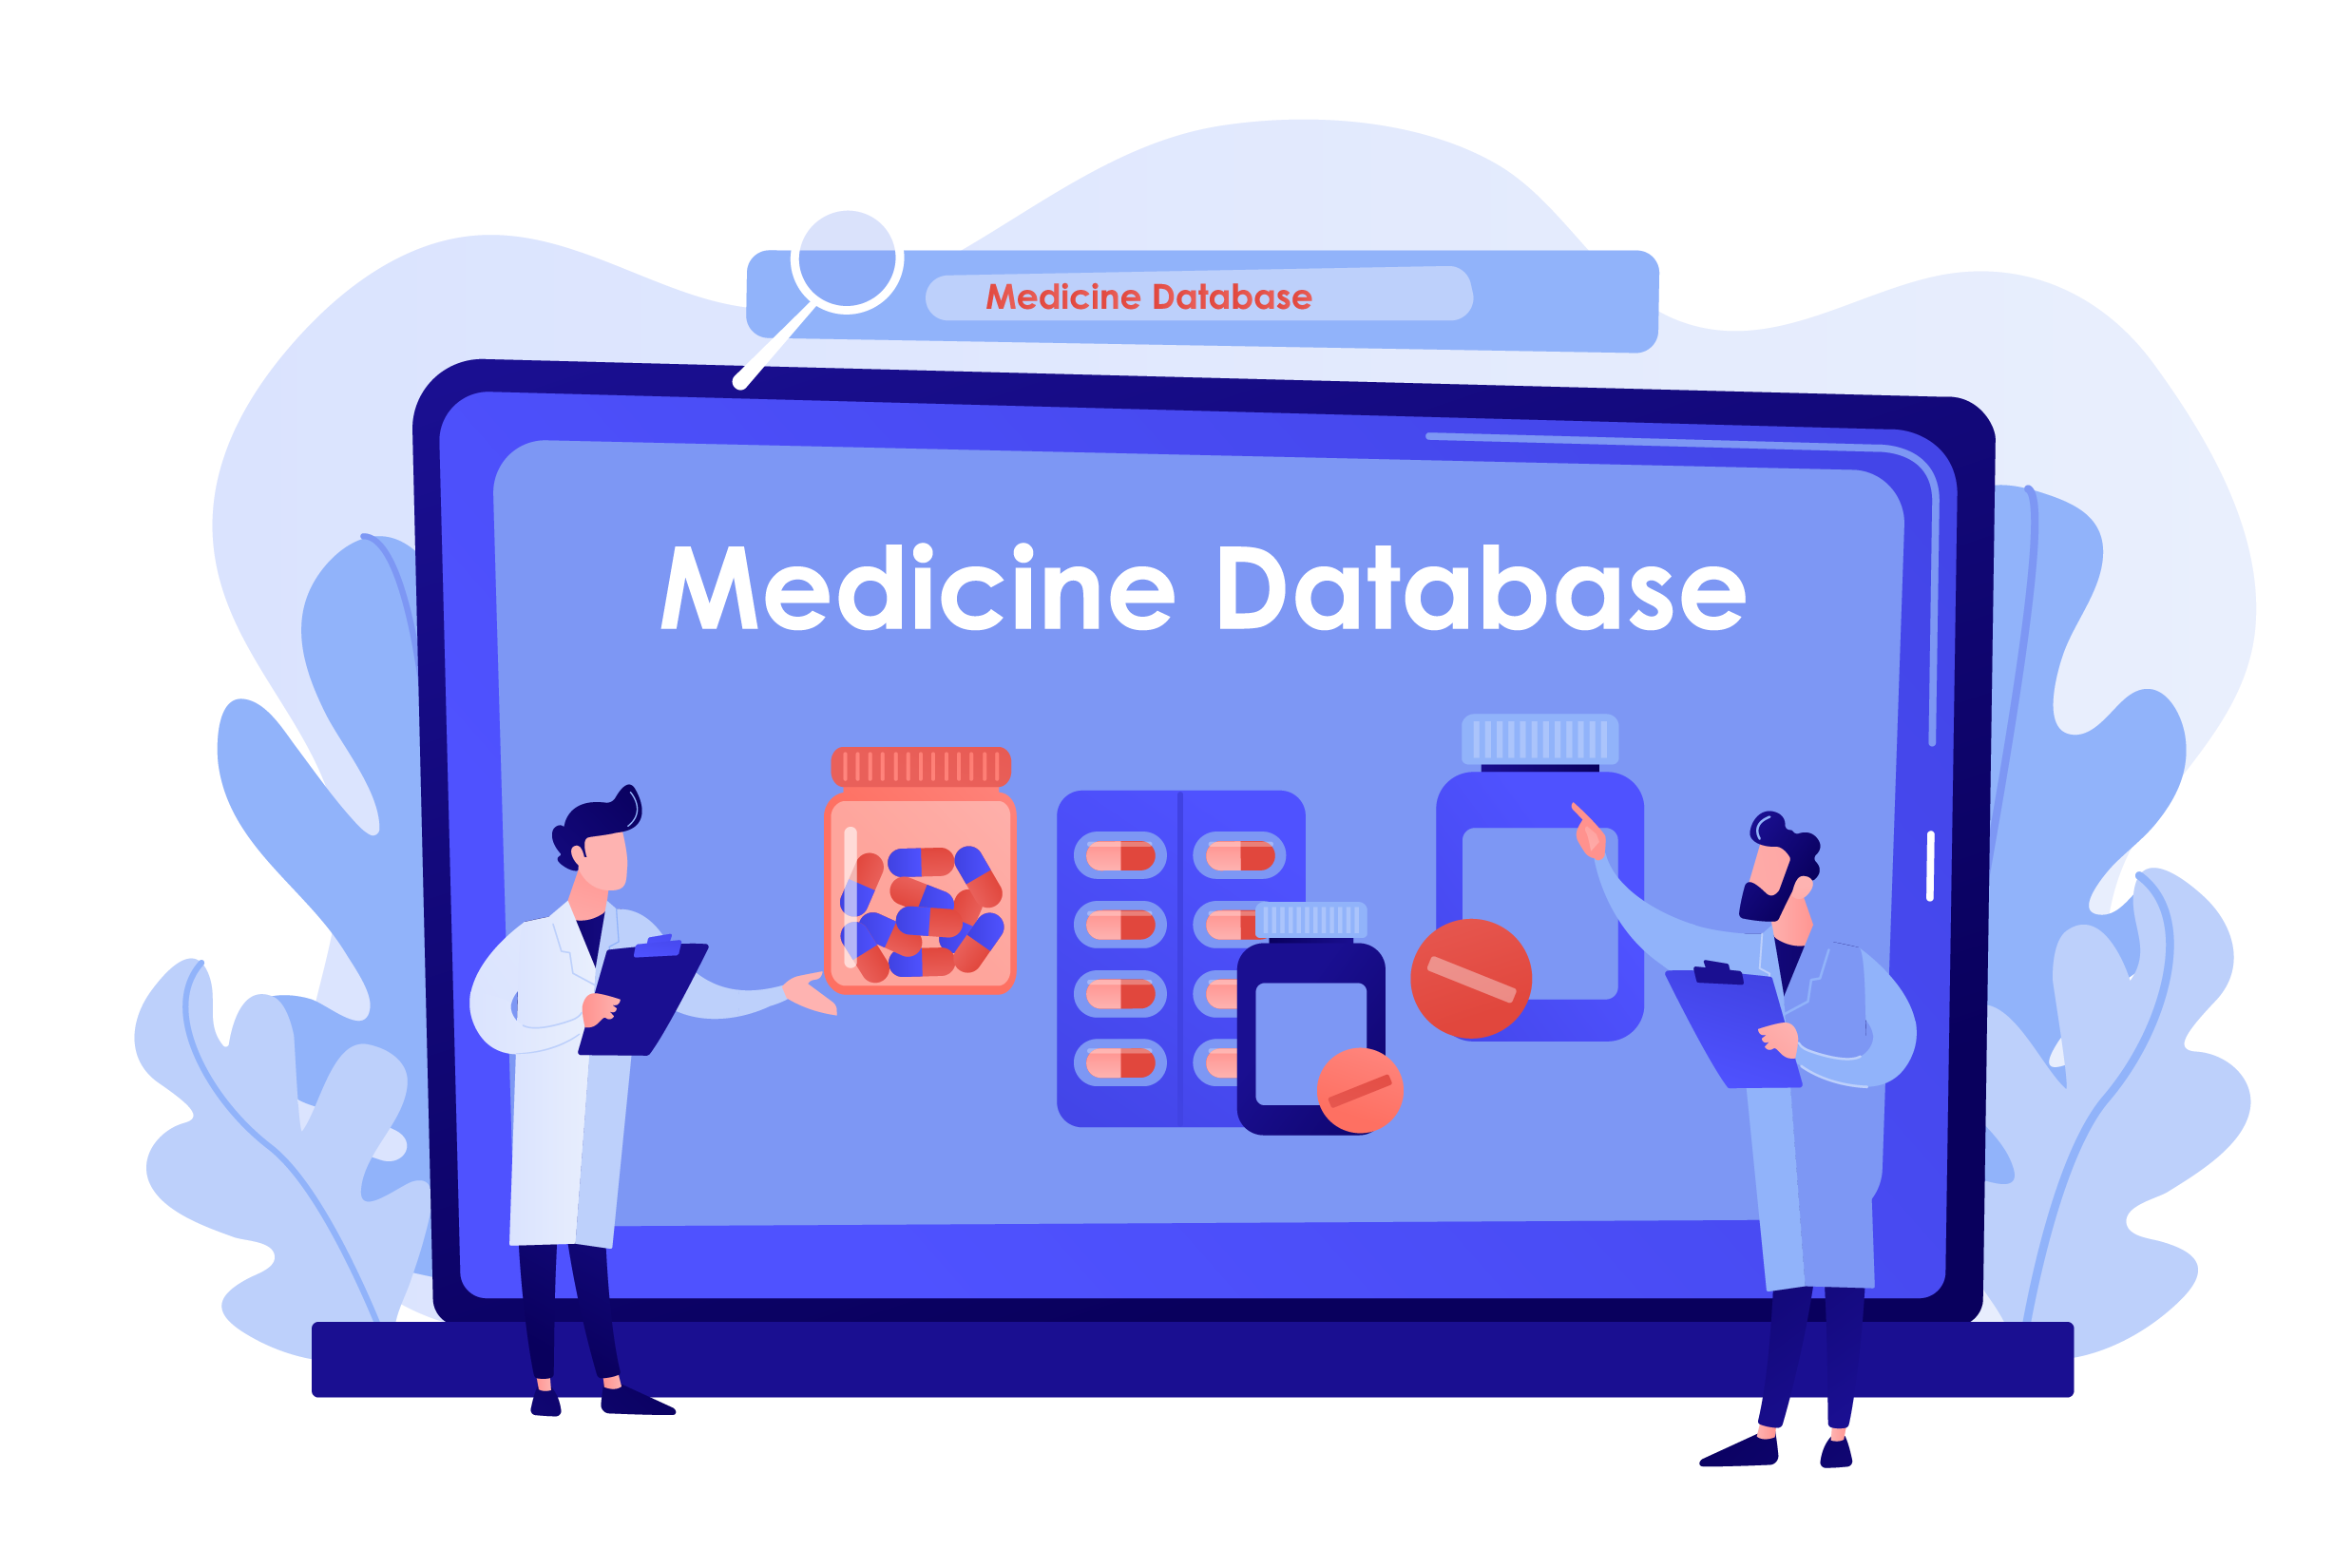 Medicine Database